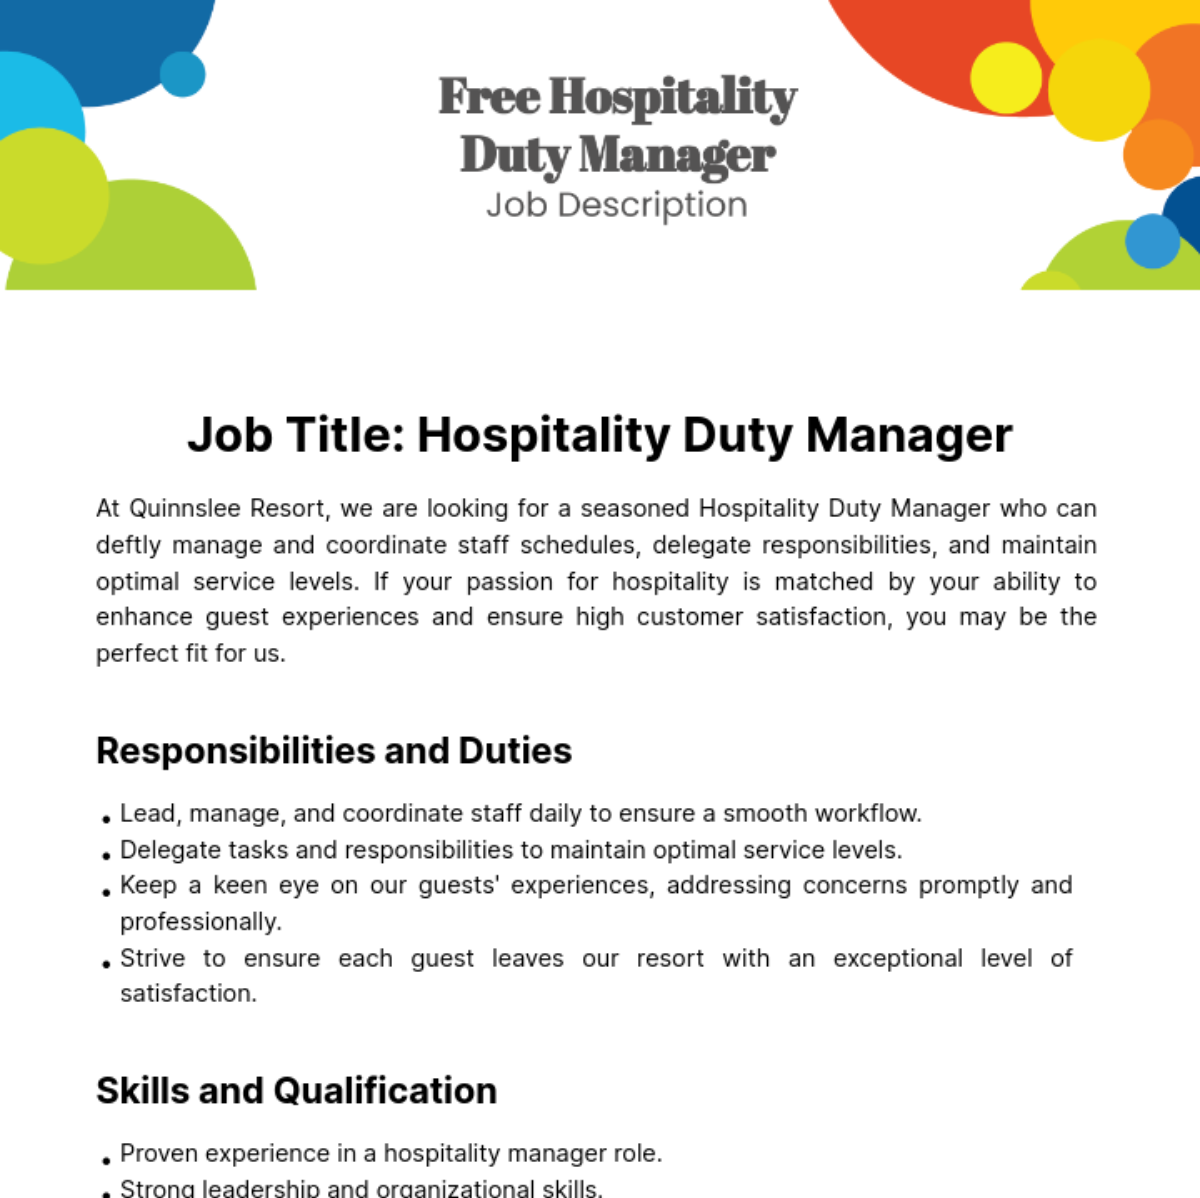 Free Hospitality Duty Manager Job Description Template